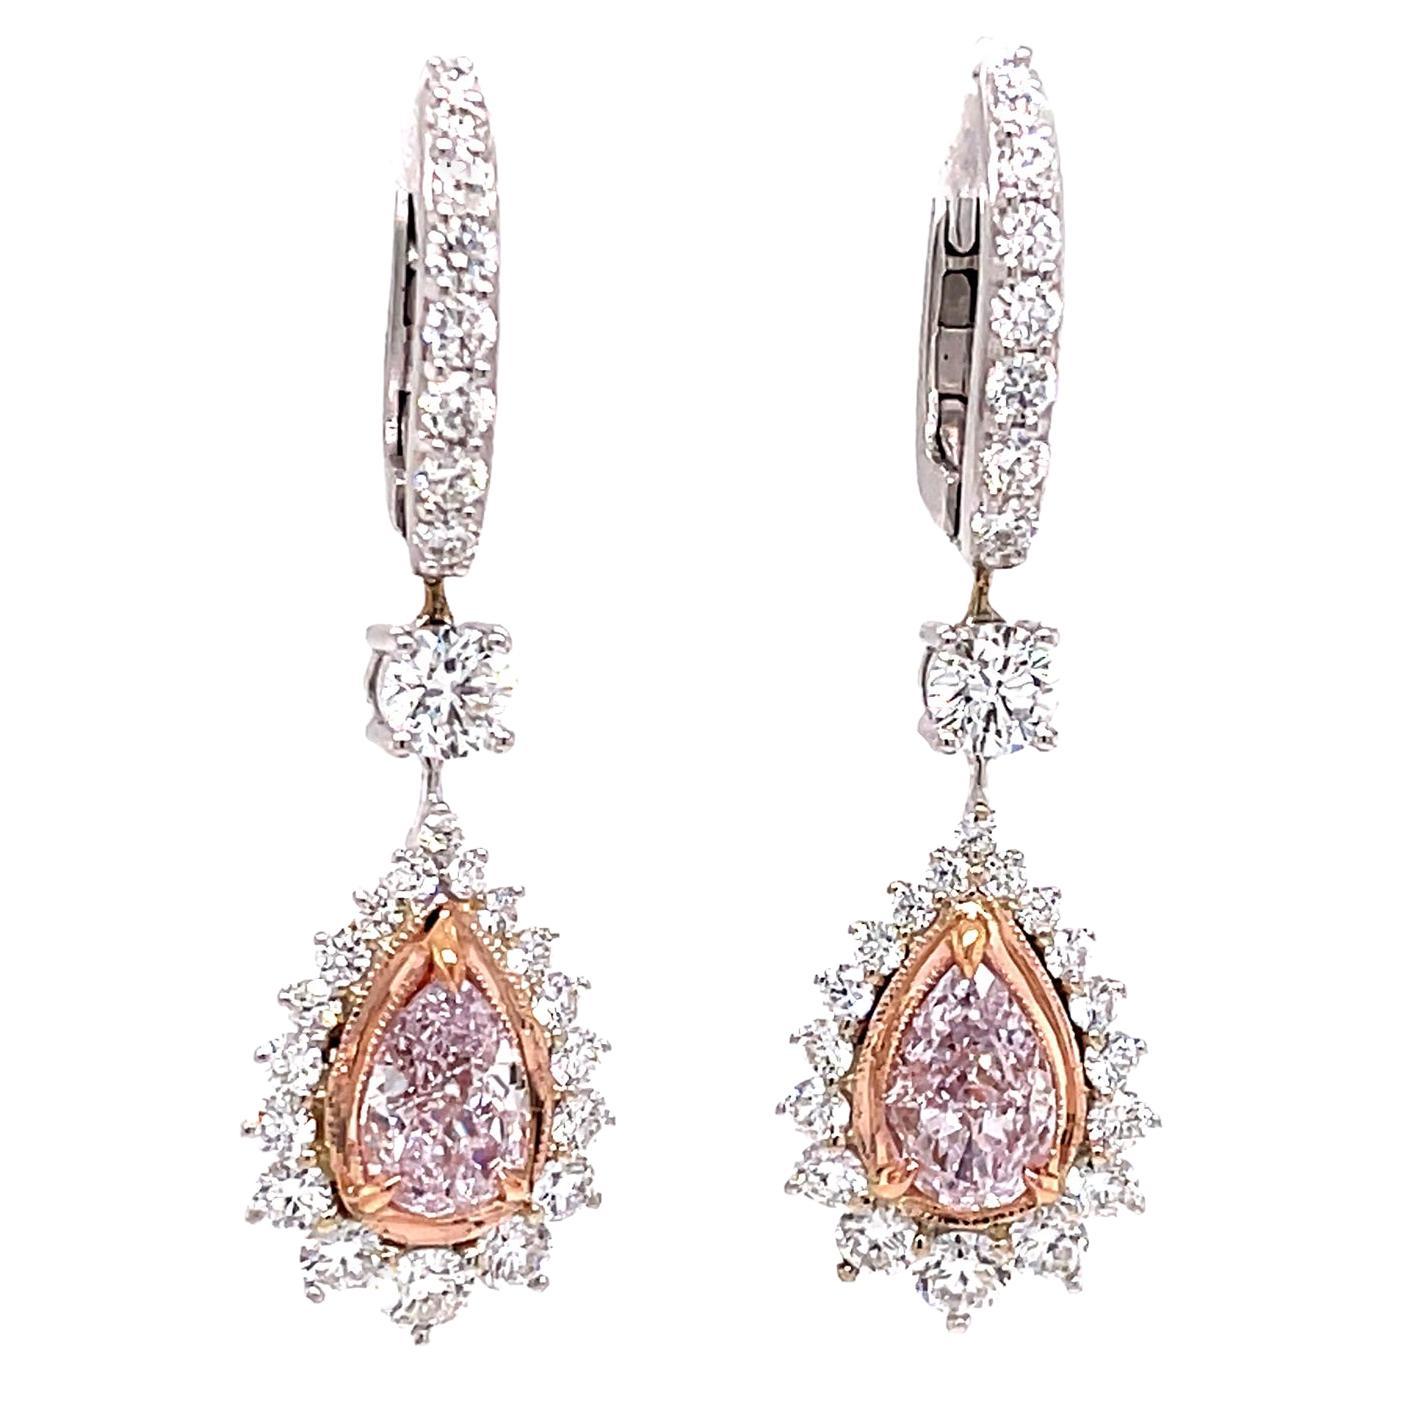 2 Carat Light Pink Diamond Drop Earrings, GIA Certified, Set In 18k White Gold. For Sale